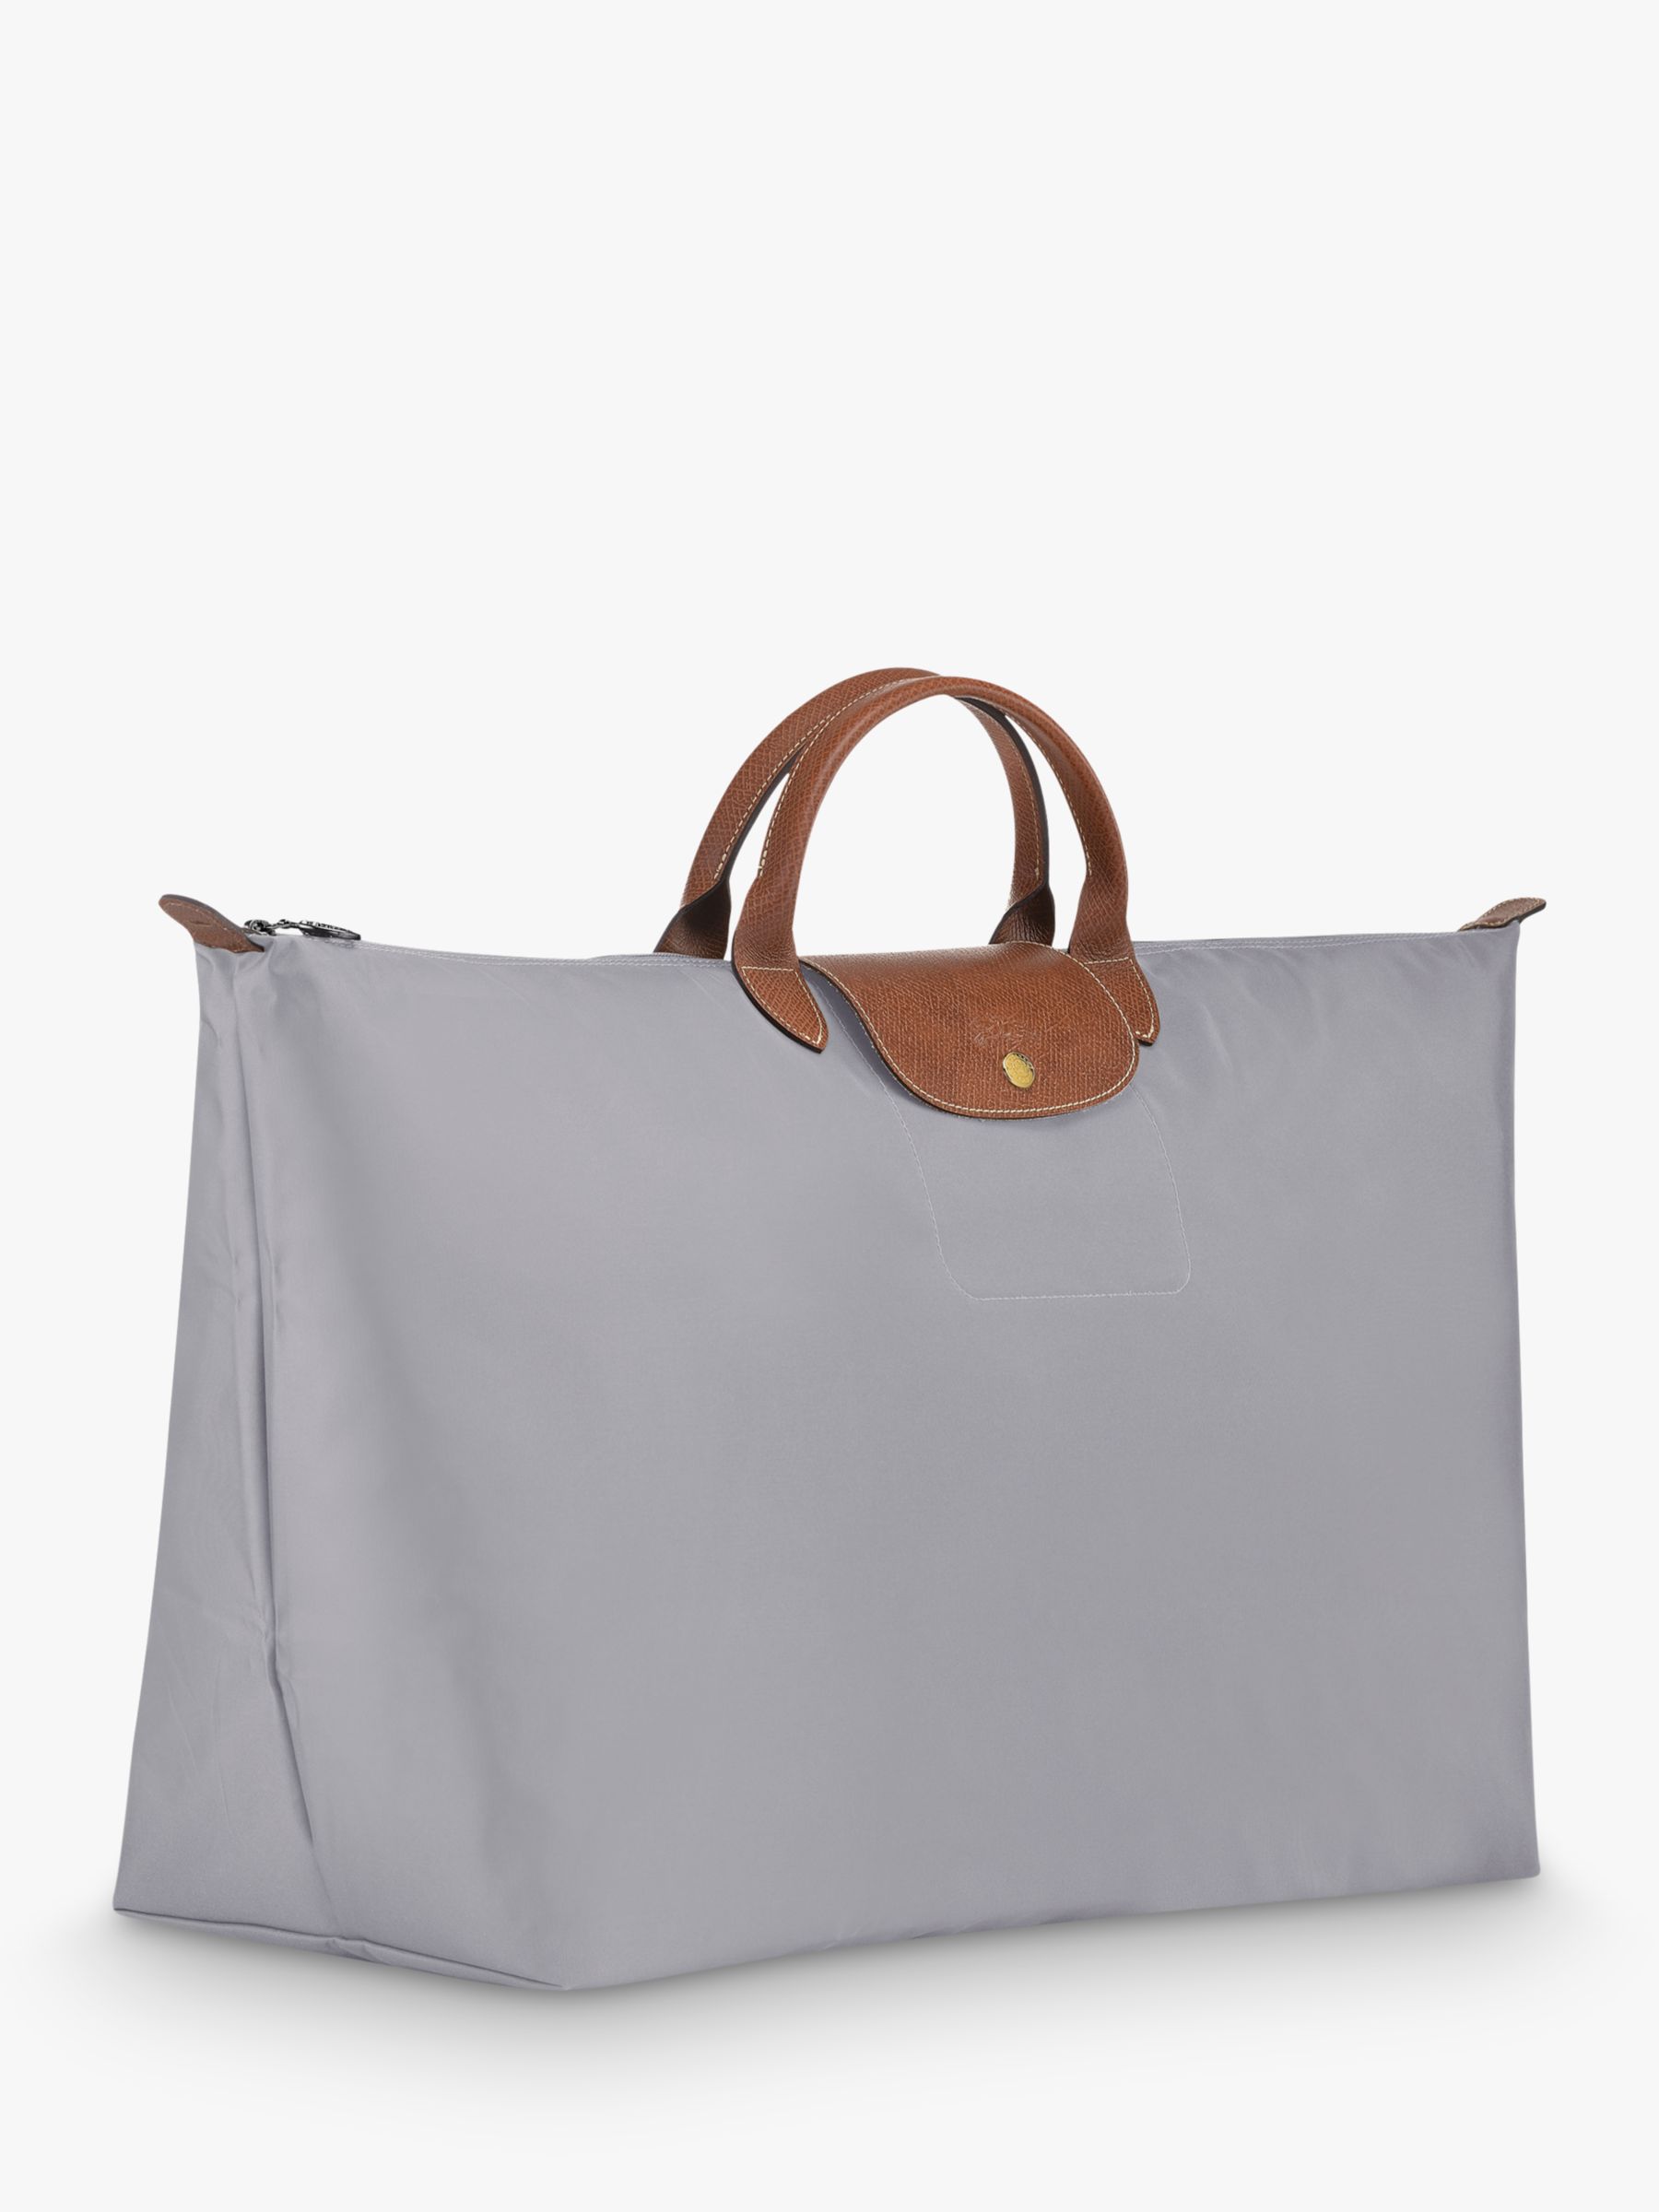 longchamp travel bag grey